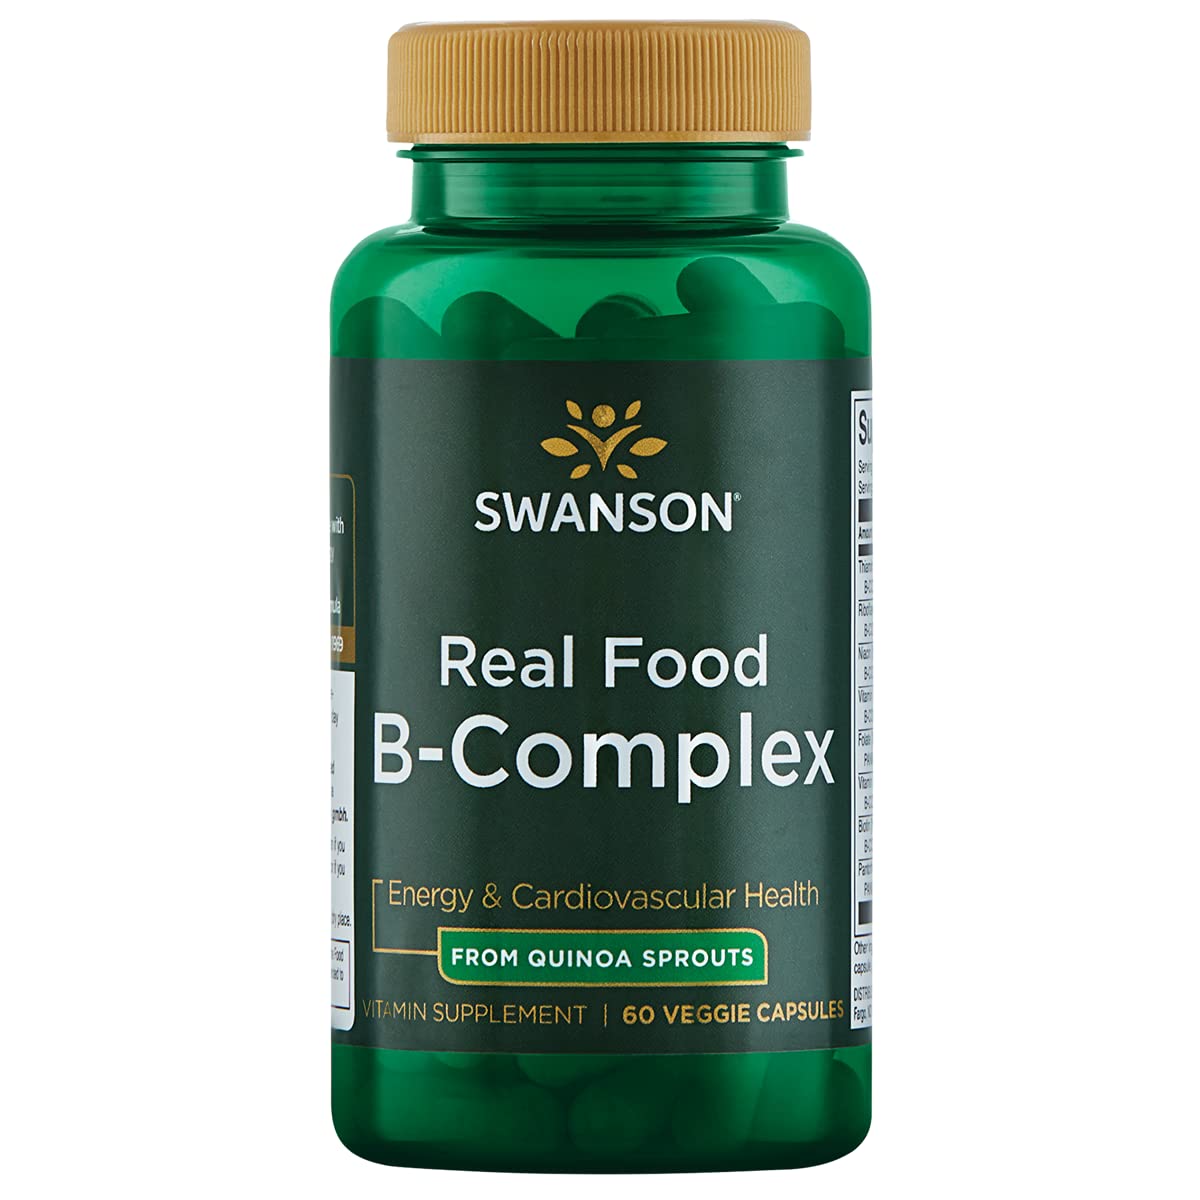 Swanson Real Food B-Complex, 60 Veggie Capsules